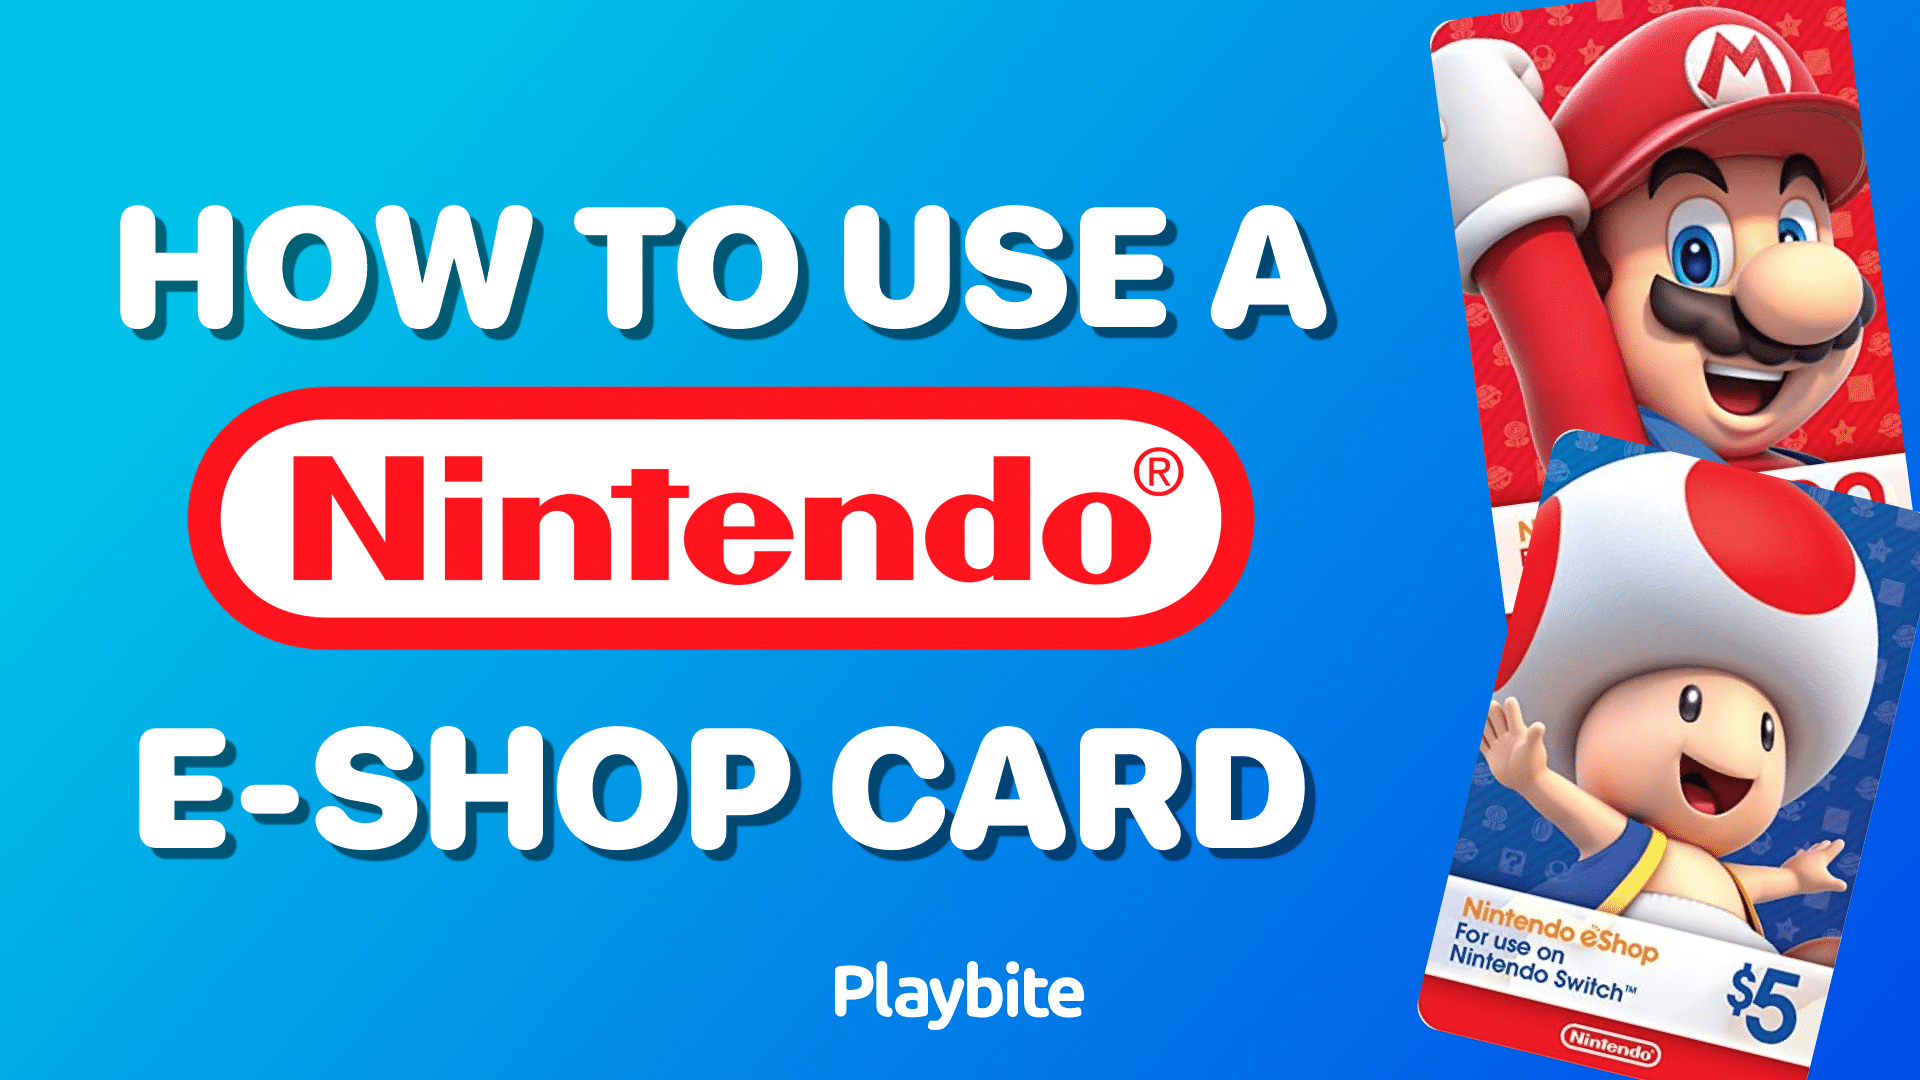 How To Use A Nintendo eShop Card - Playbite